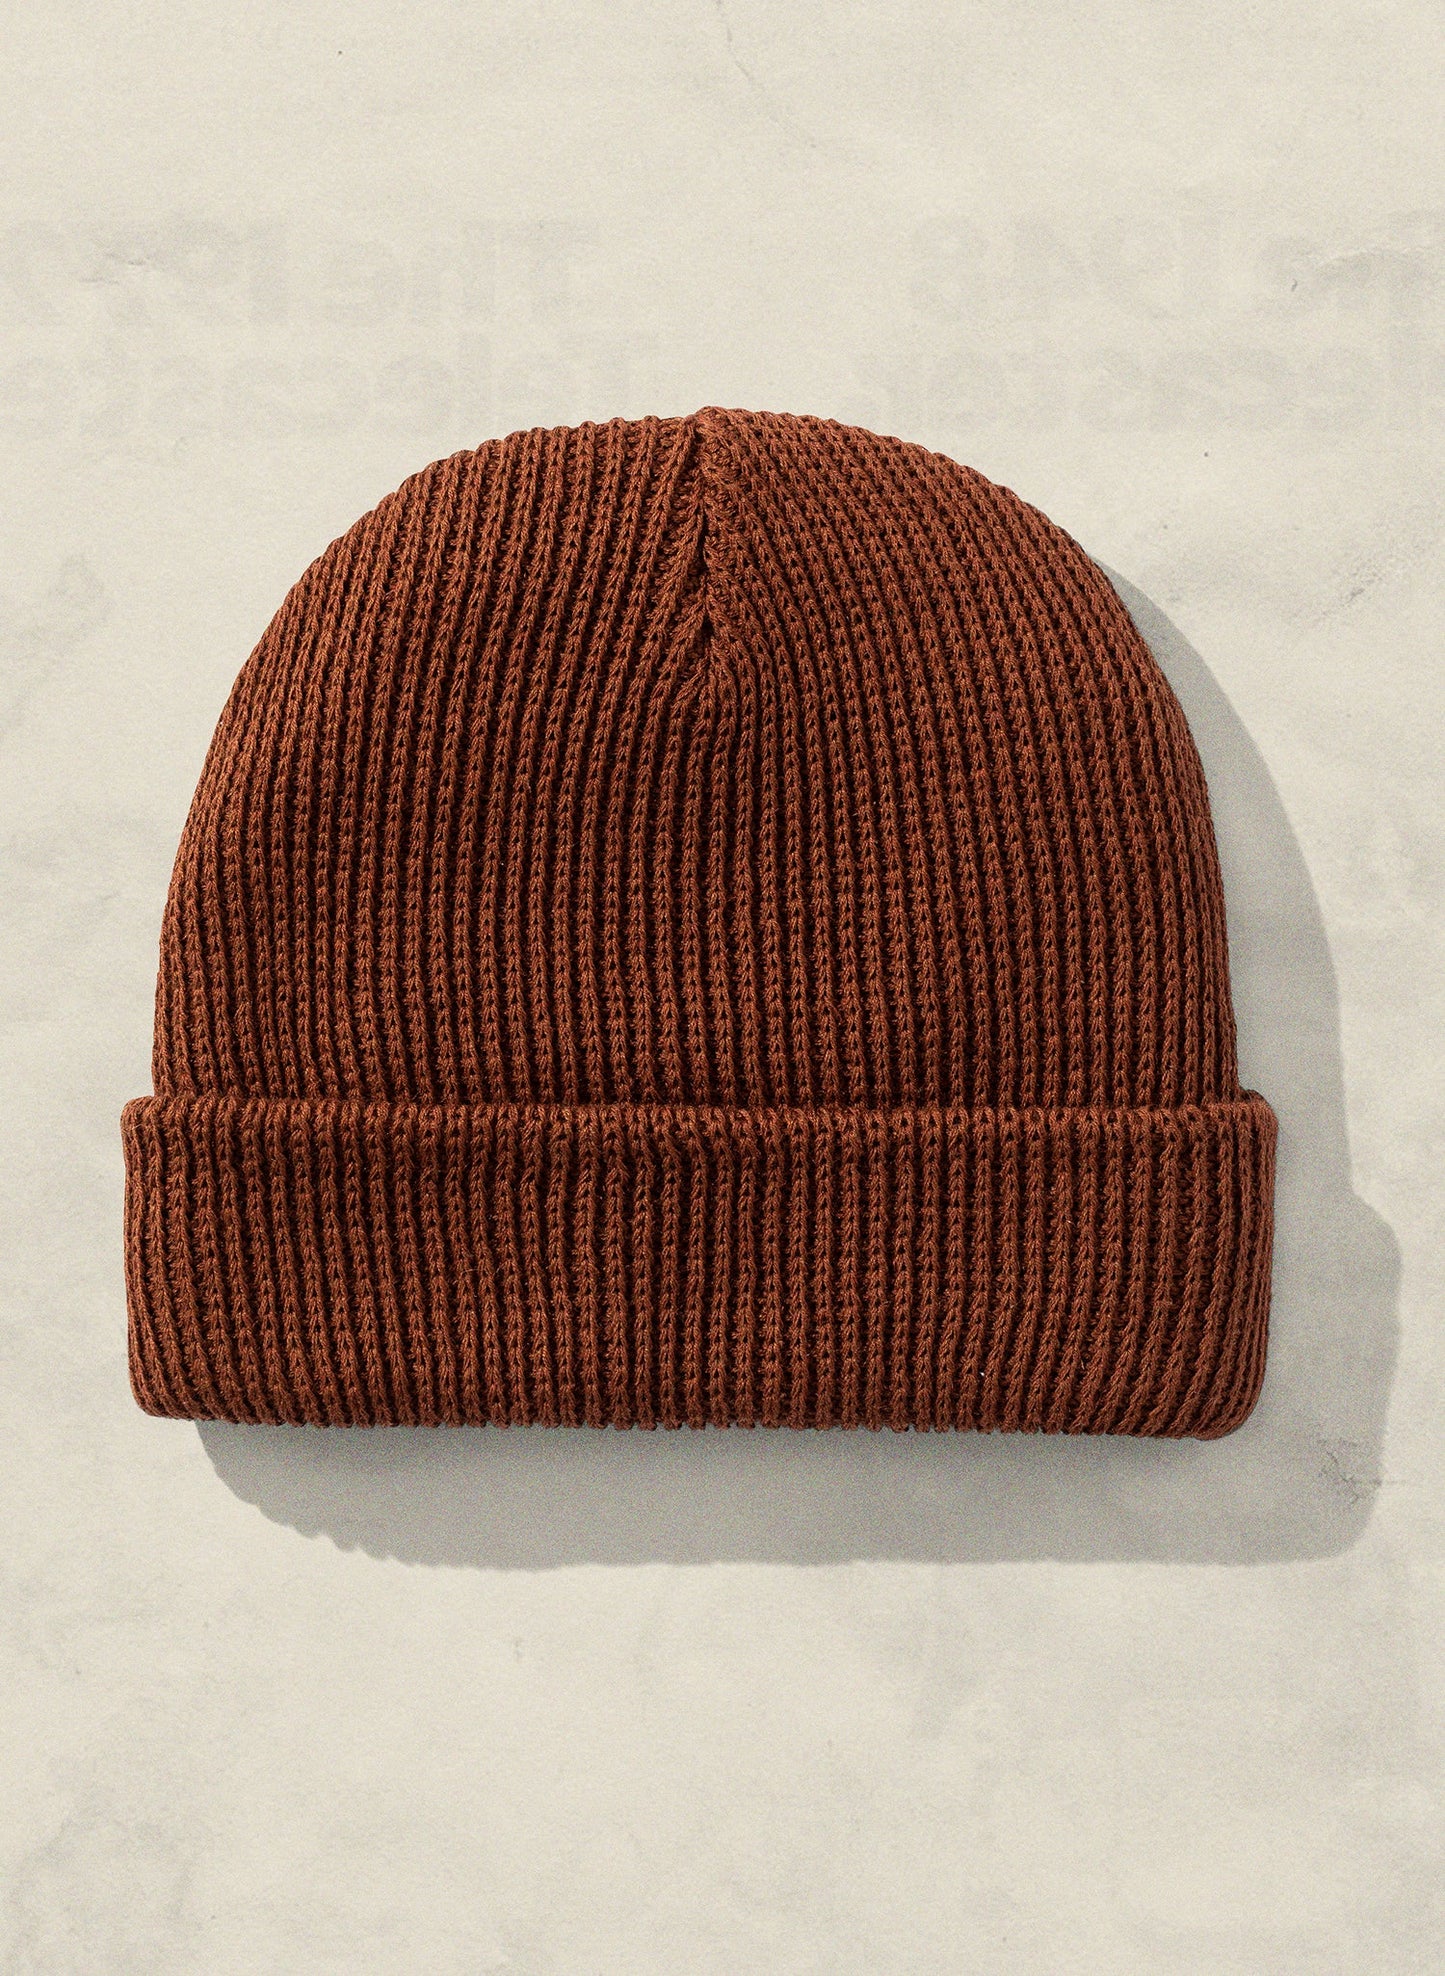 Weld Mfg Hemp Slacker Knit Ribbed Beanie Hat - Vintage Inspired Warm Comfortable Hat - Brown